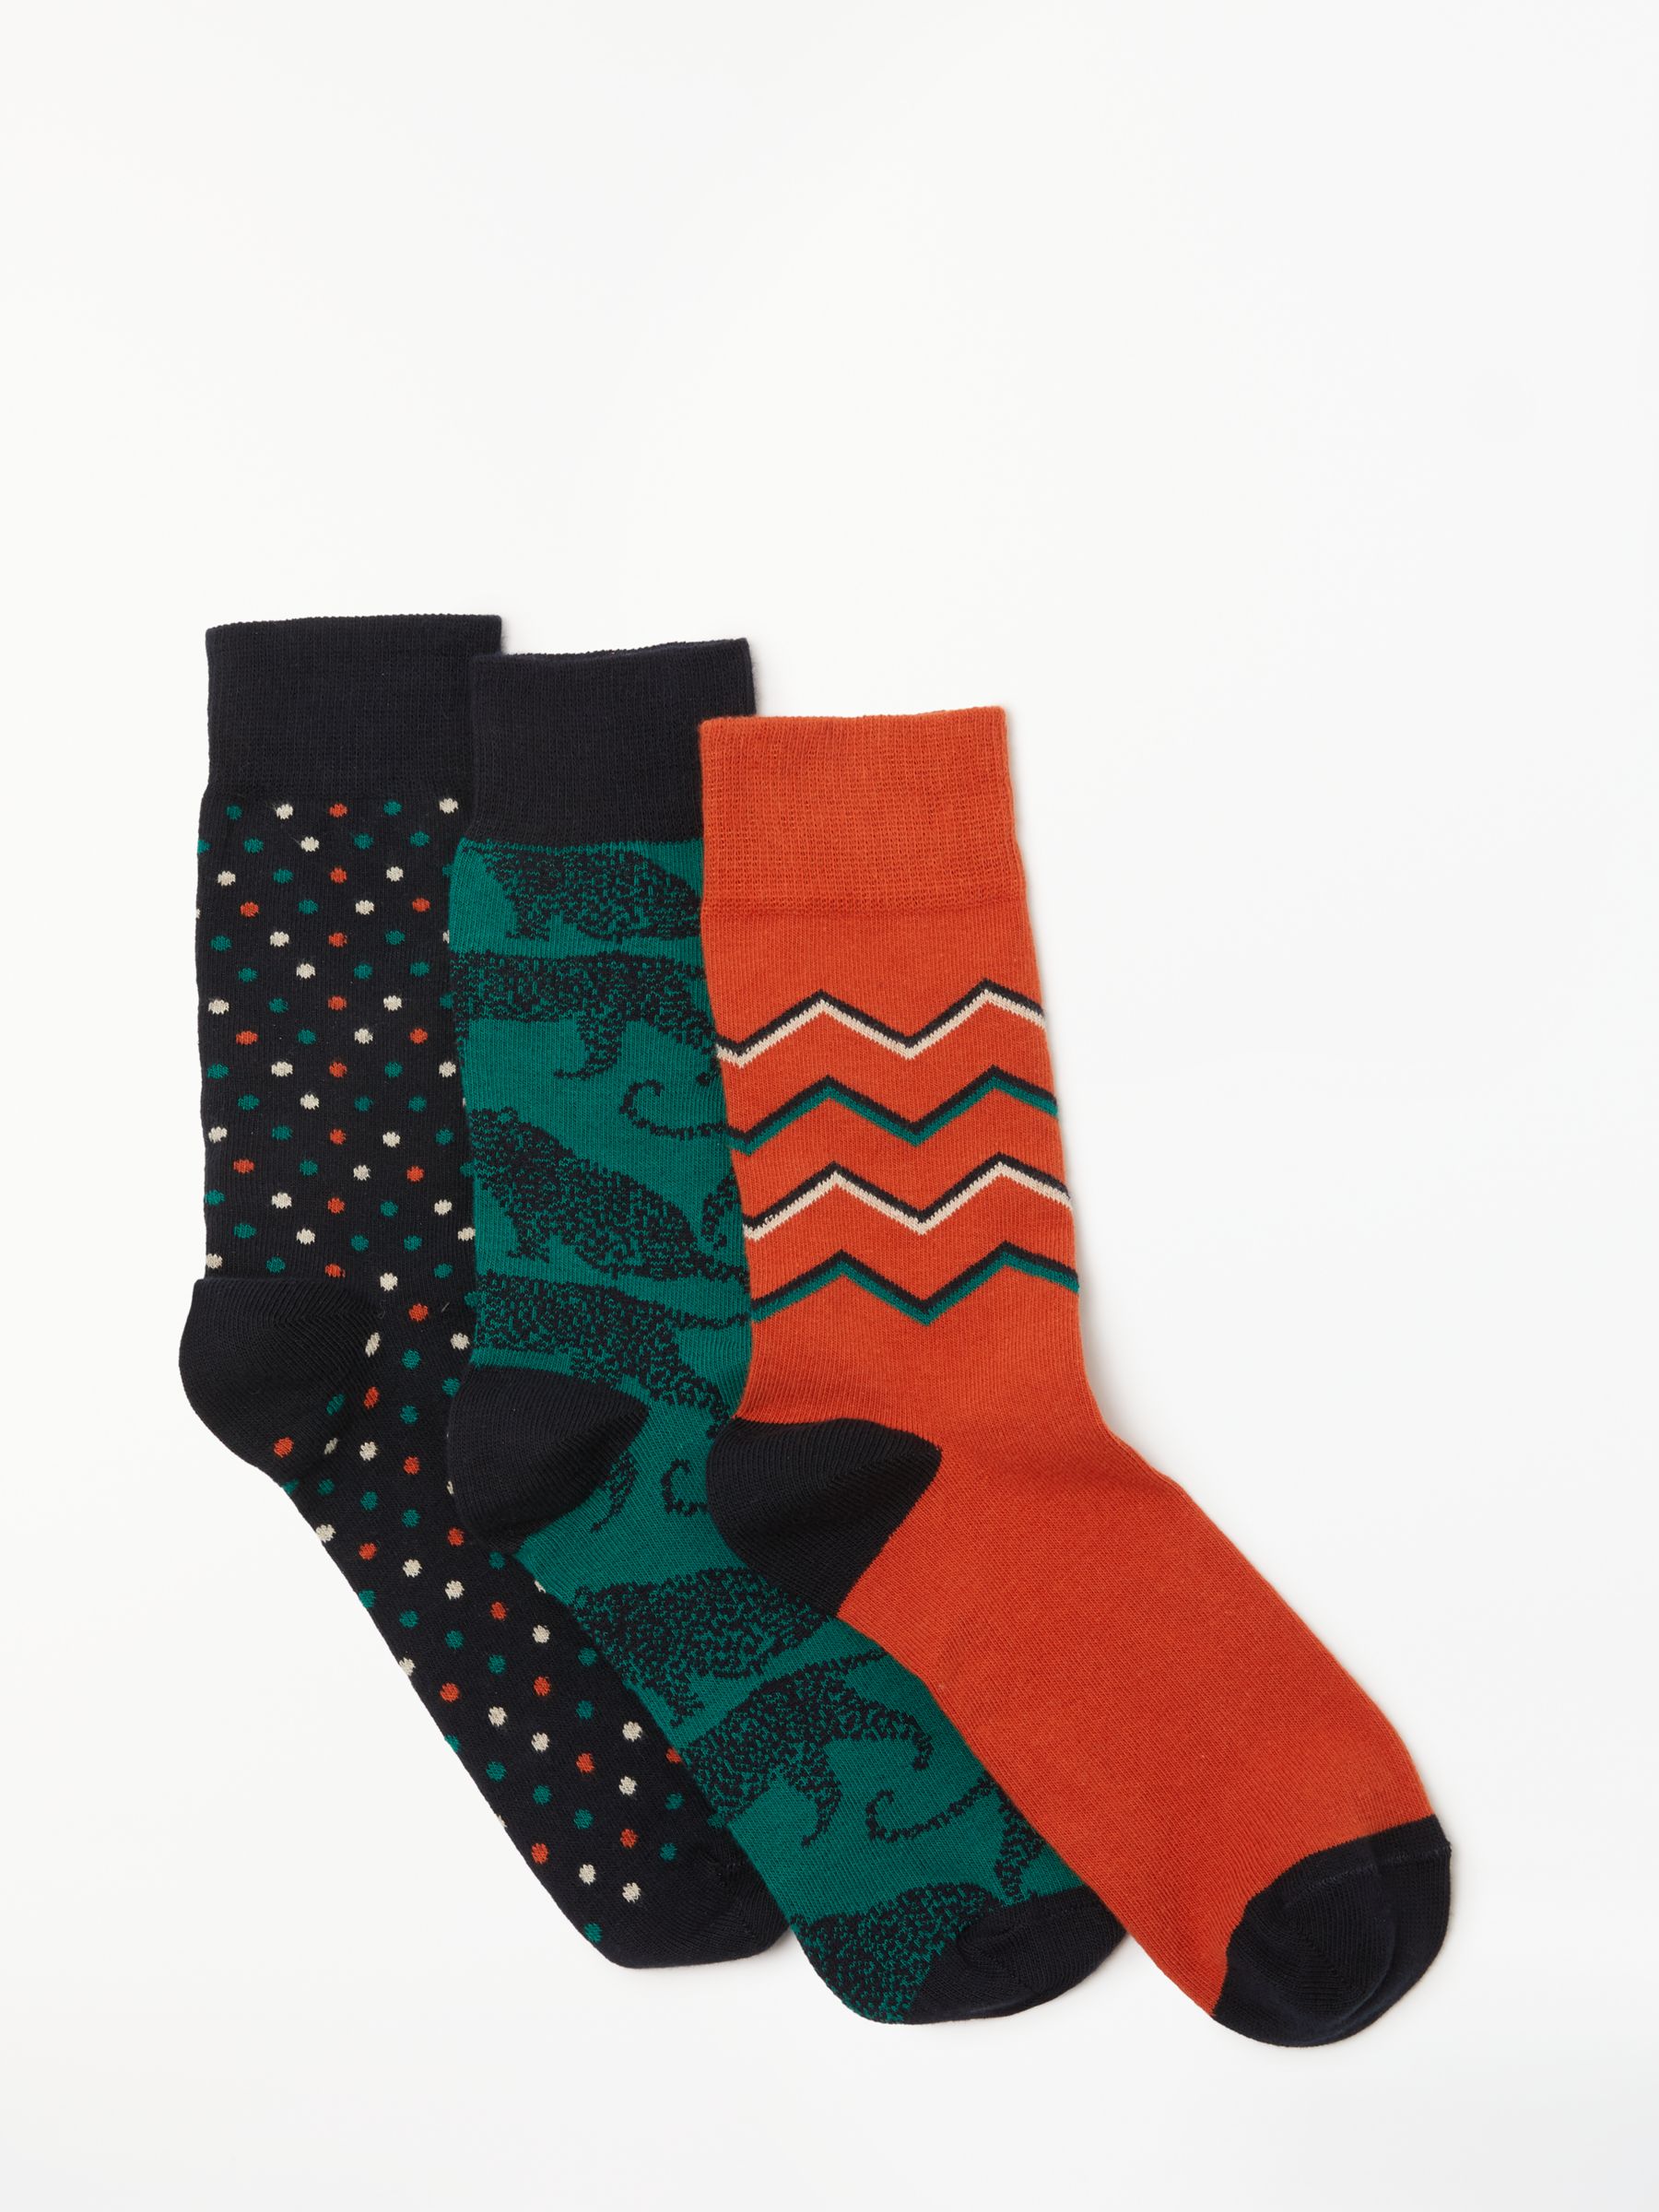 John Lewis & Partners Leopard Pattern Socks, Pack of 3, Orange/Black/Green